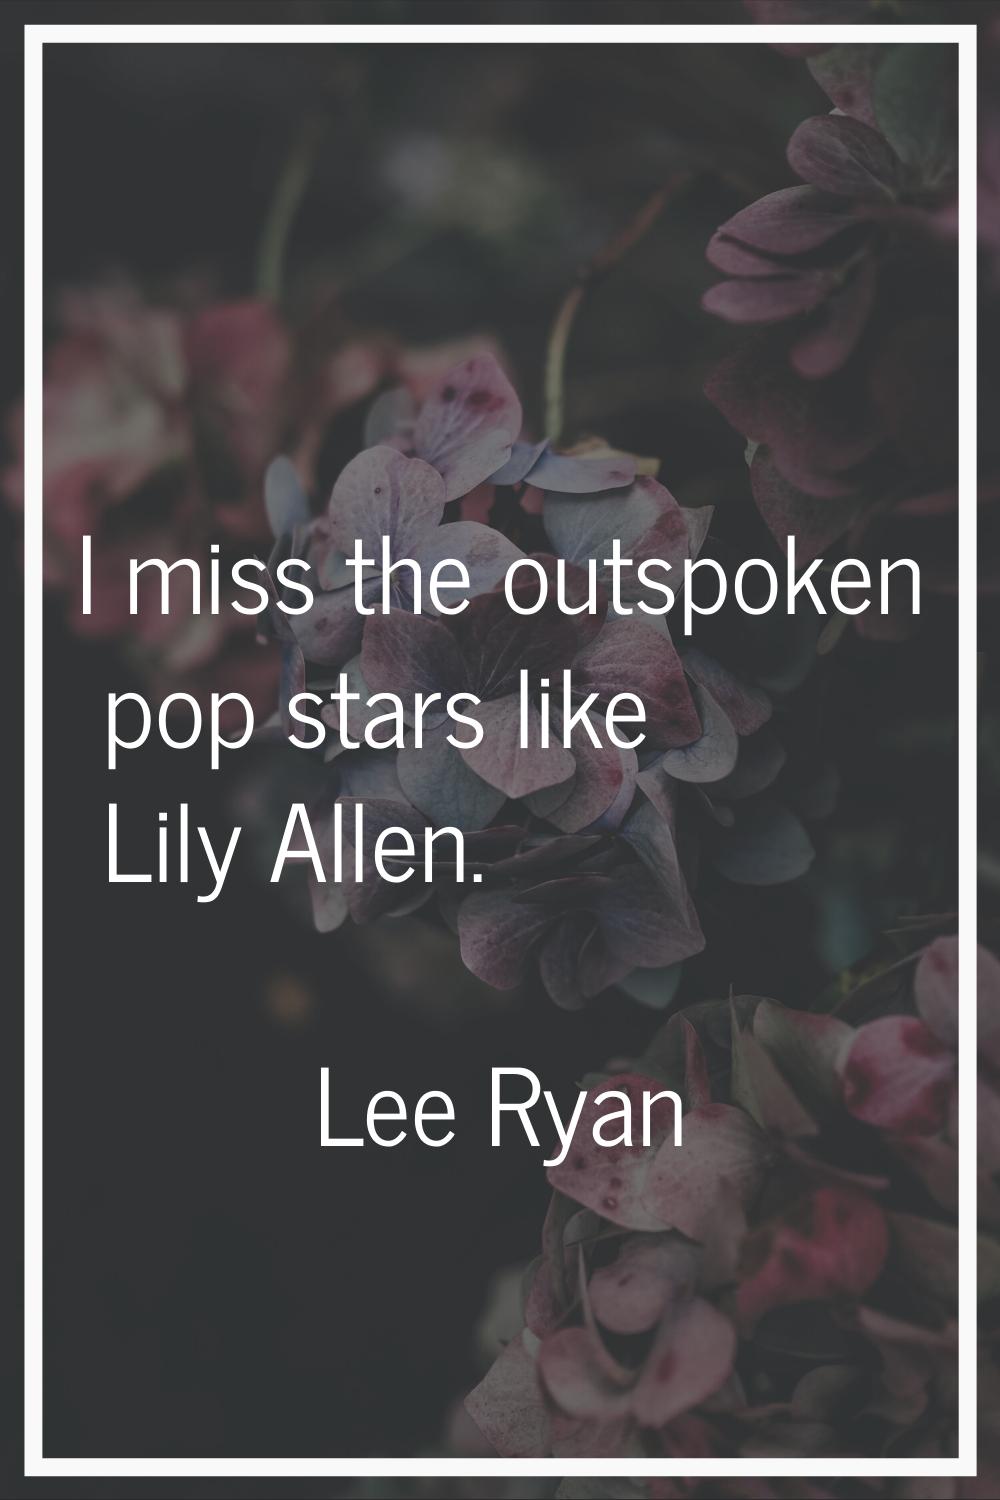 I miss the outspoken pop stars like Lily Allen.